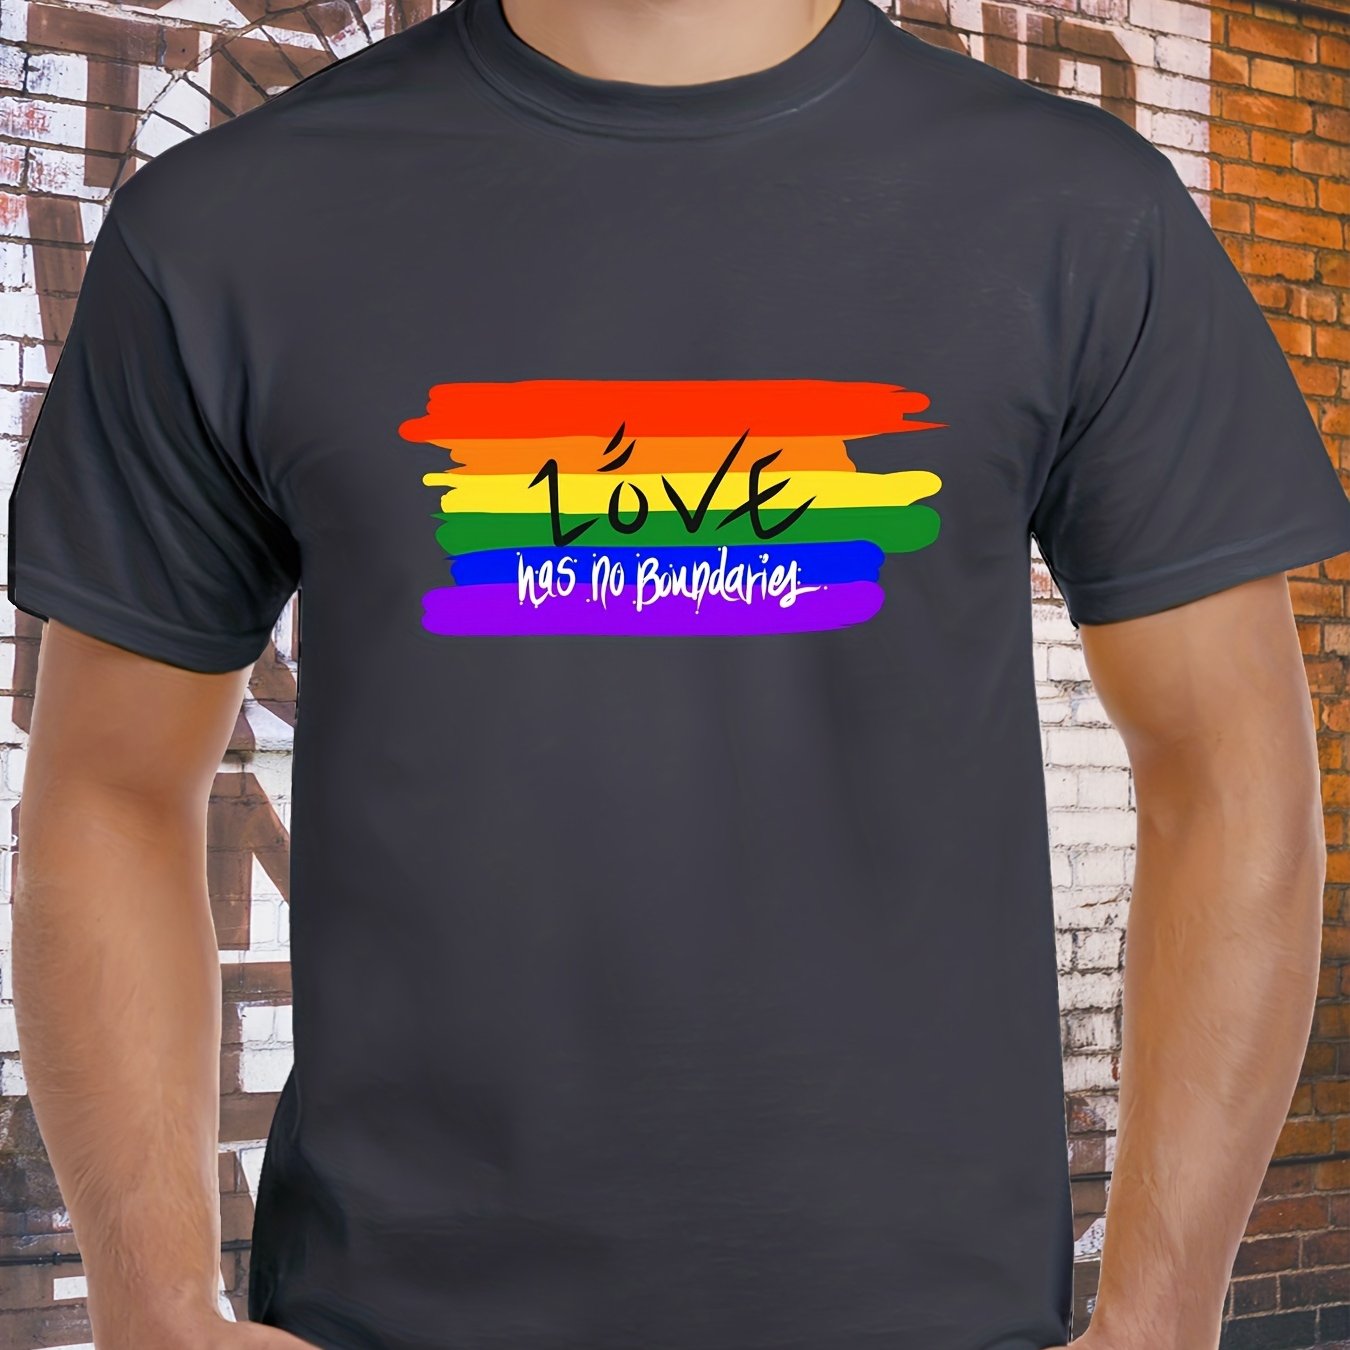 Love Has No Boundaries T-Shirt